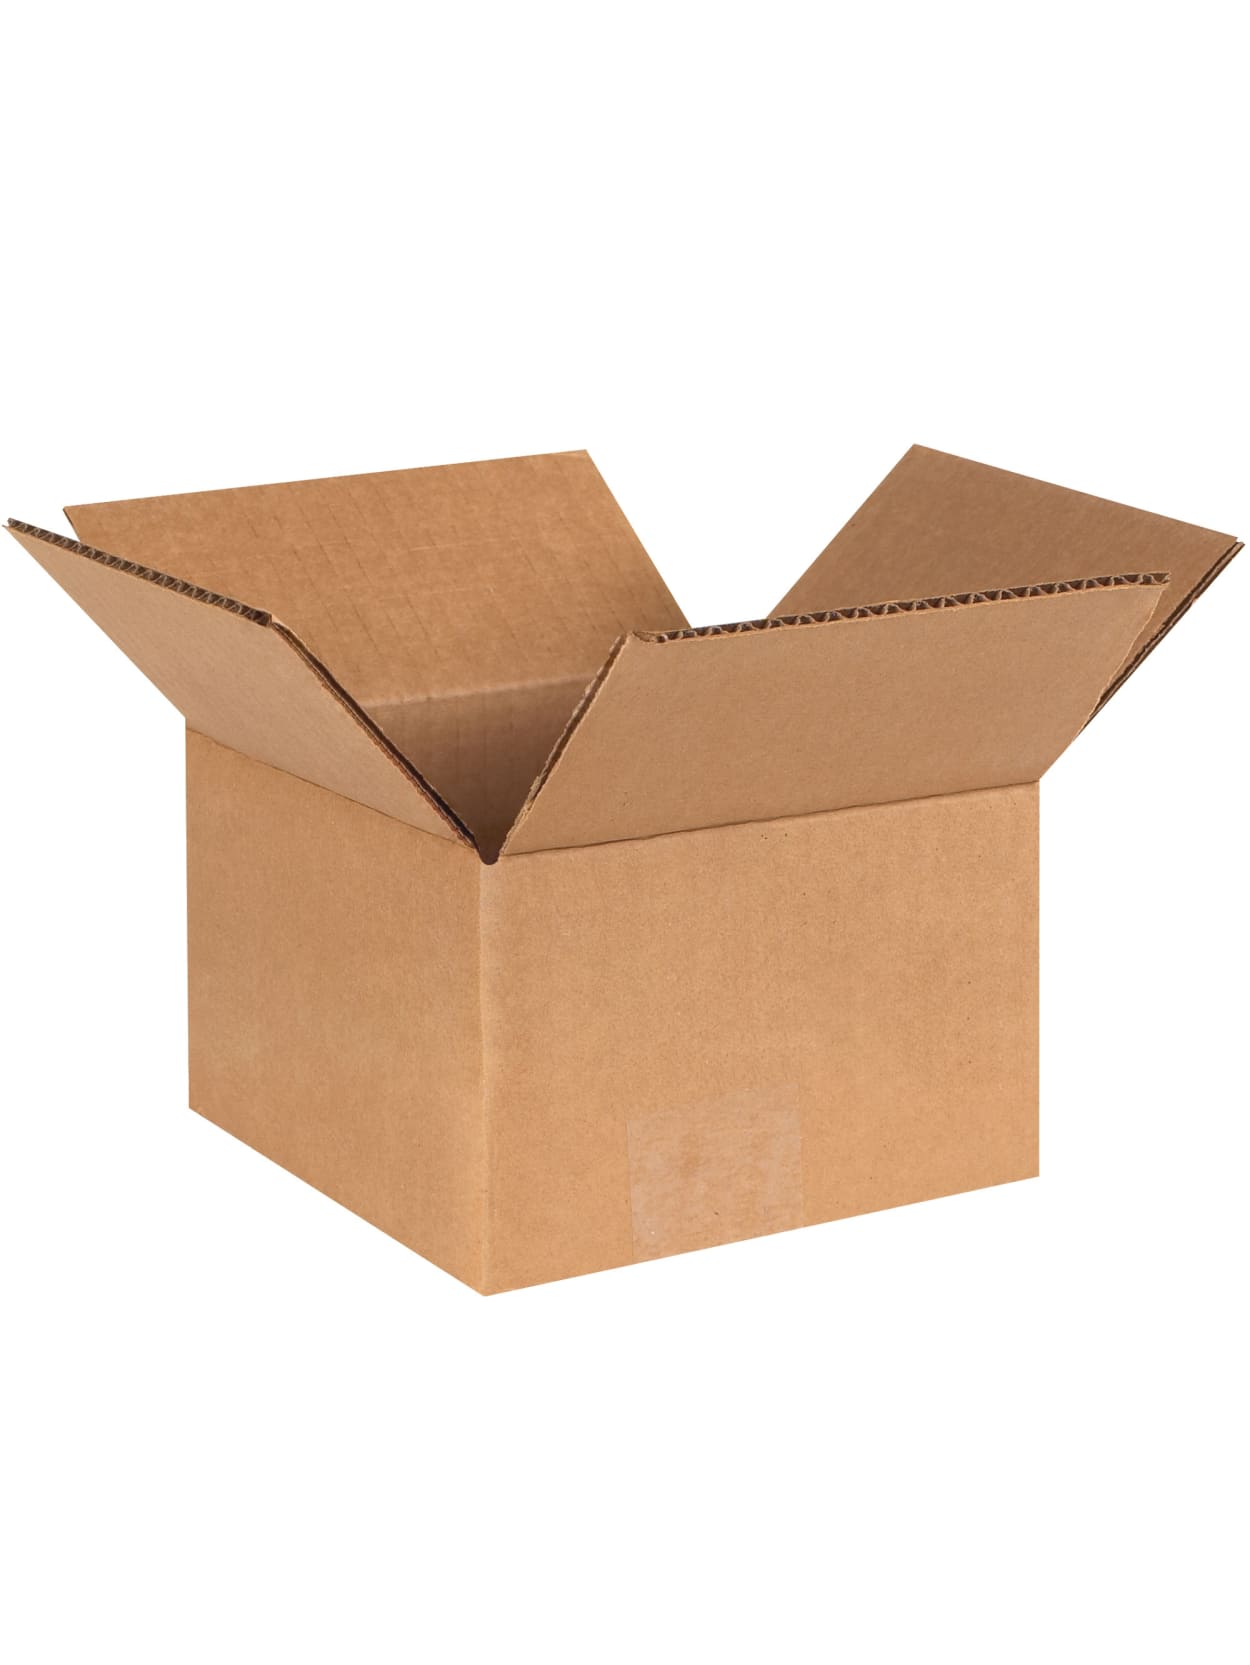 4" x 4" x 5" Cardboard Boxes Mailing Packing Shipping Box Corrugated Carton